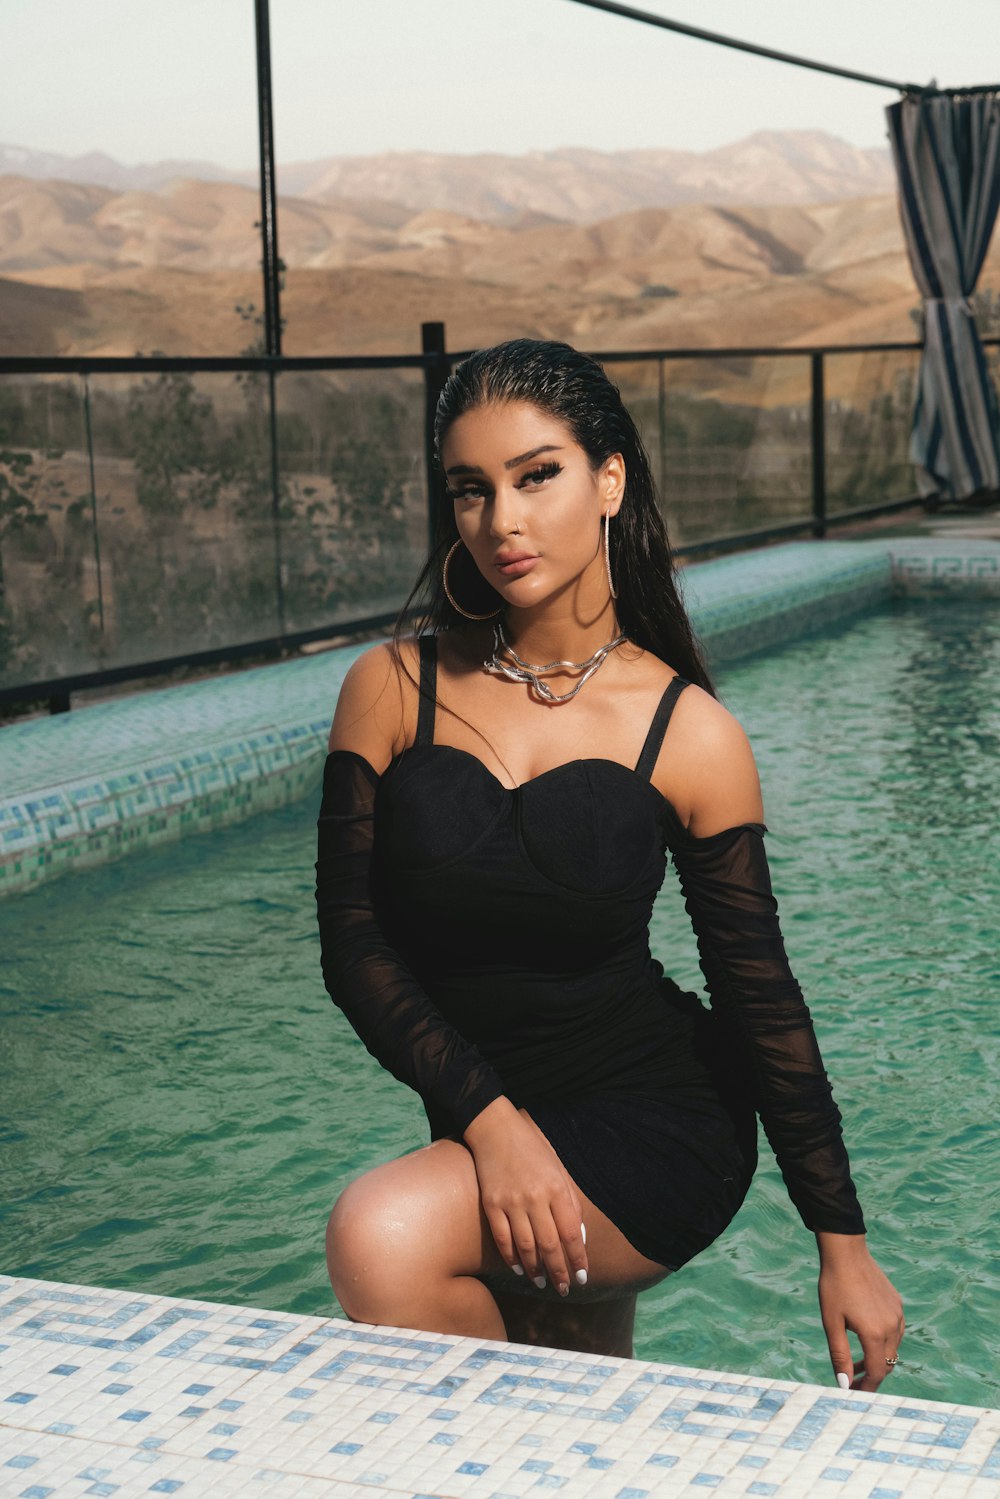 a woman in a black dress sitting in a pool